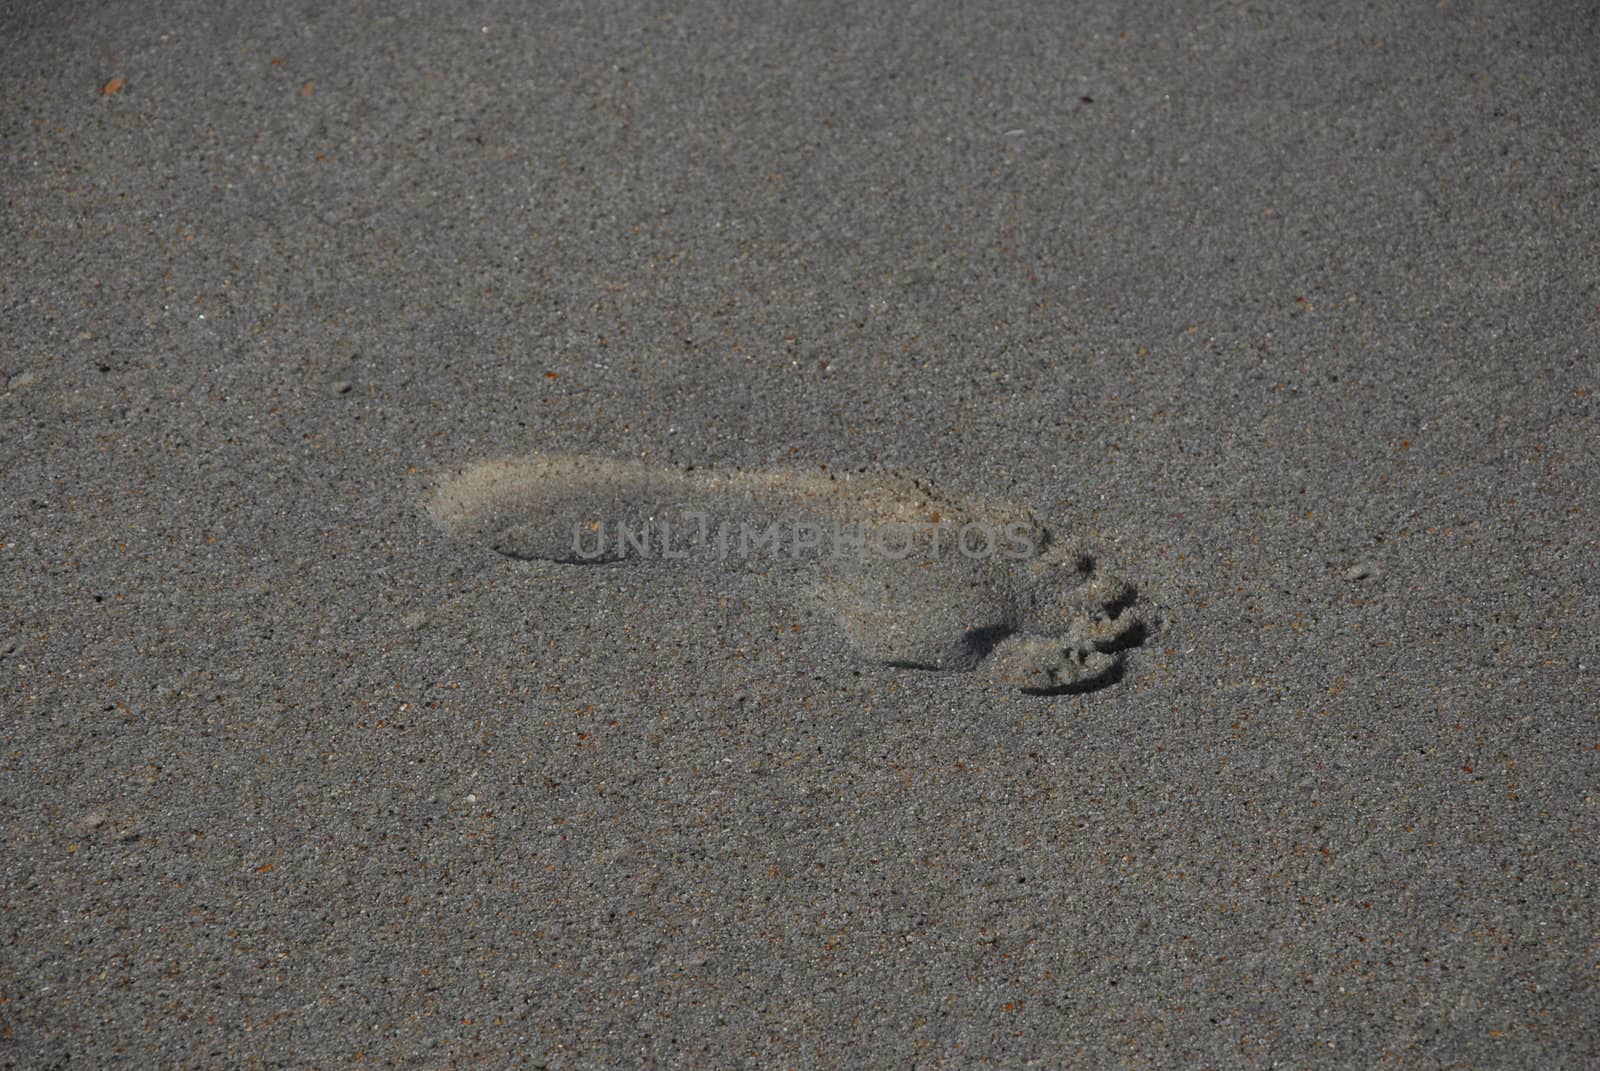 footprint by northwoodsphoto